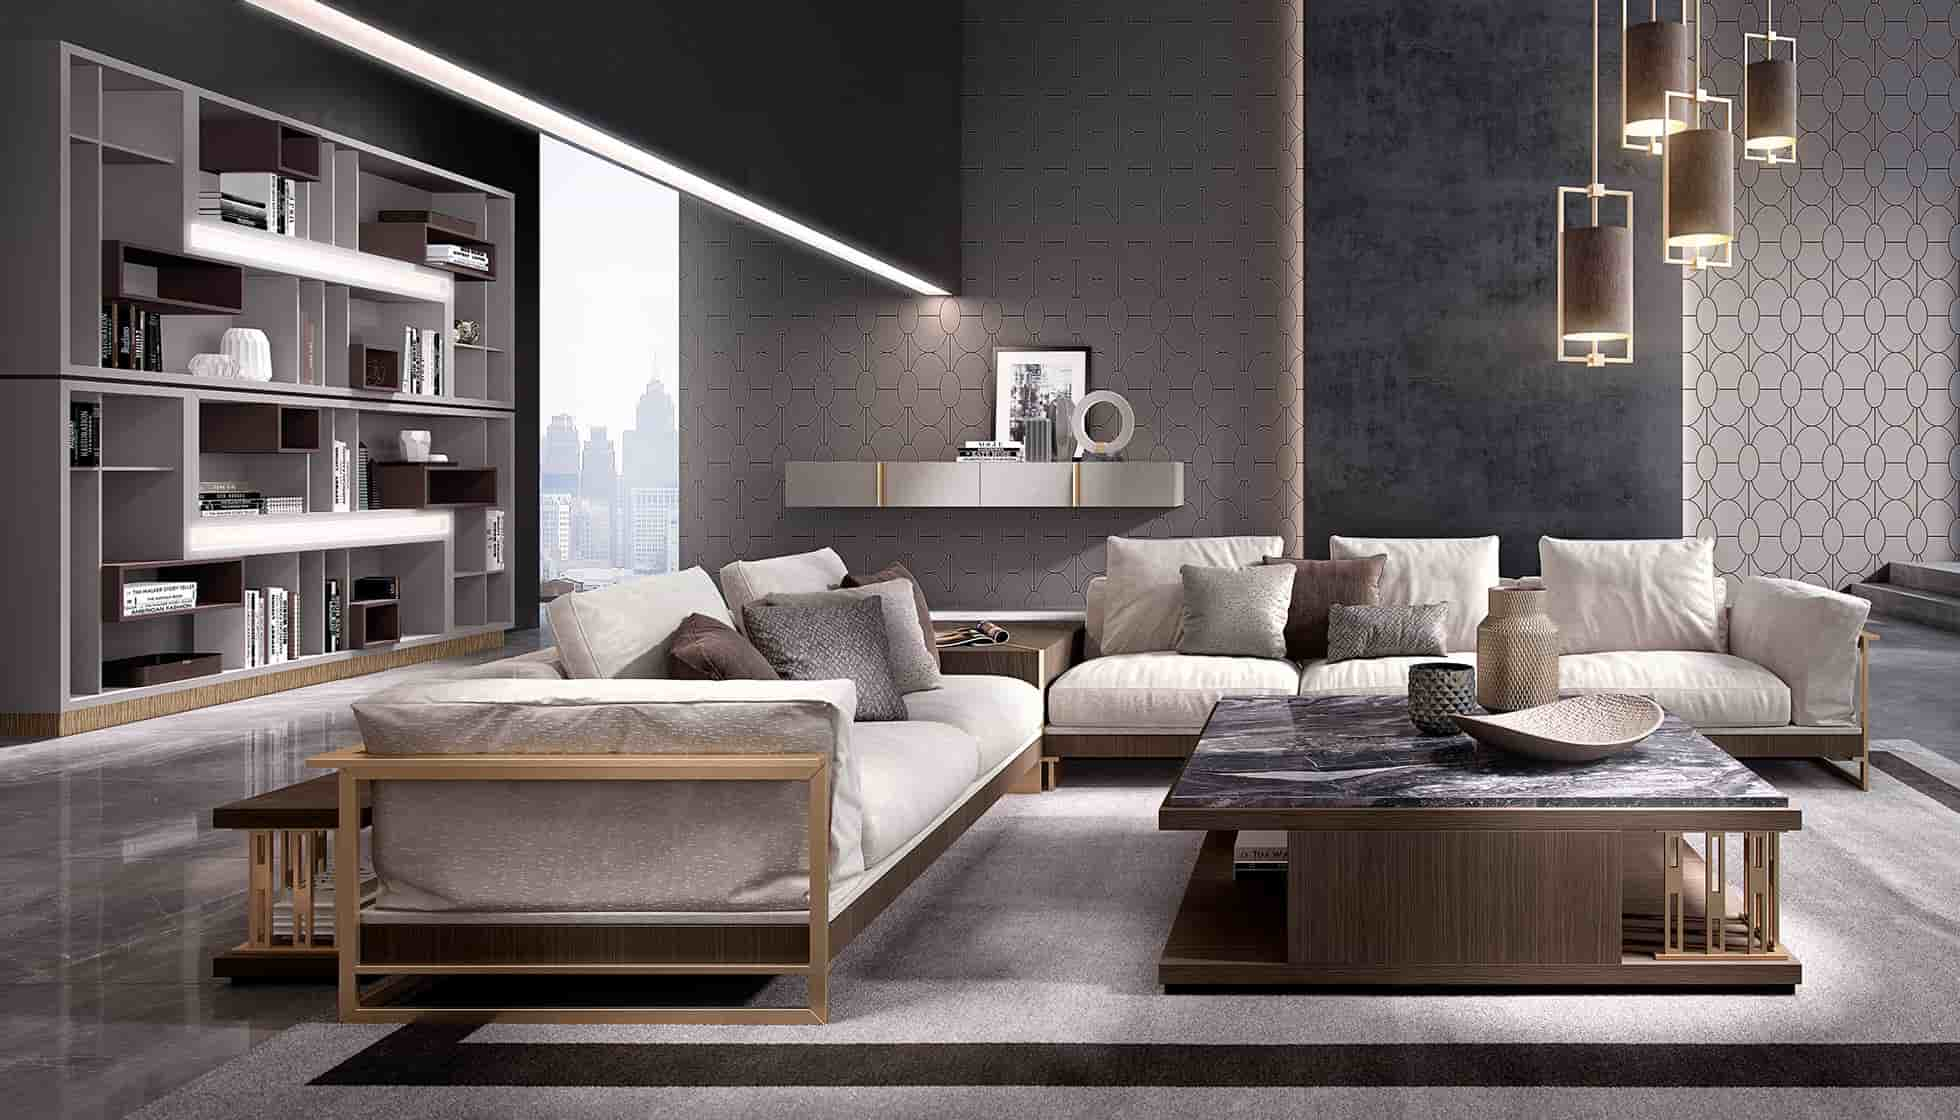 Living room furniture from William Sonoma, Inc.